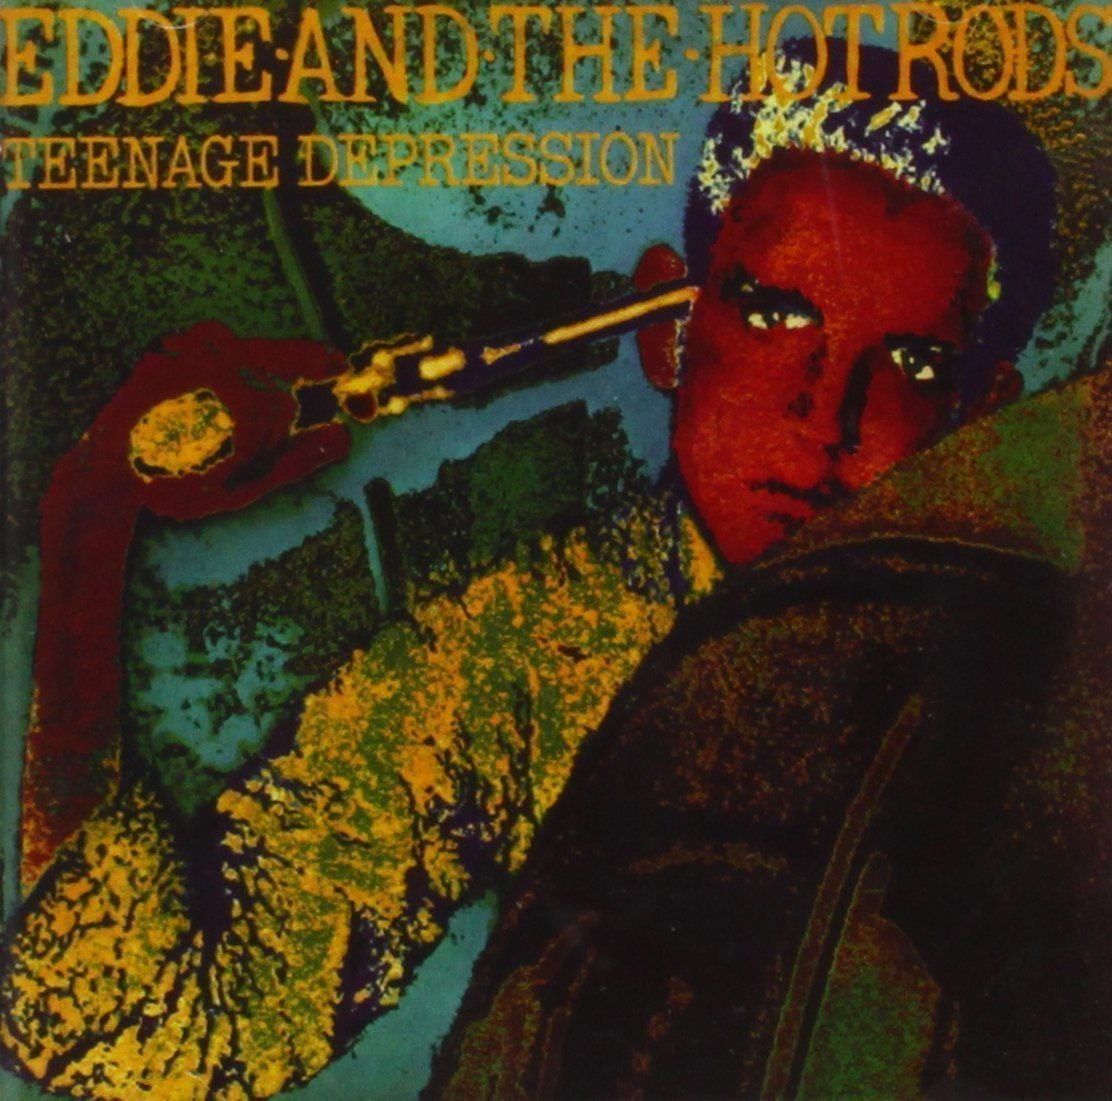 LP deska Eddie And The Hot Rods - Teenage Depression (LP)